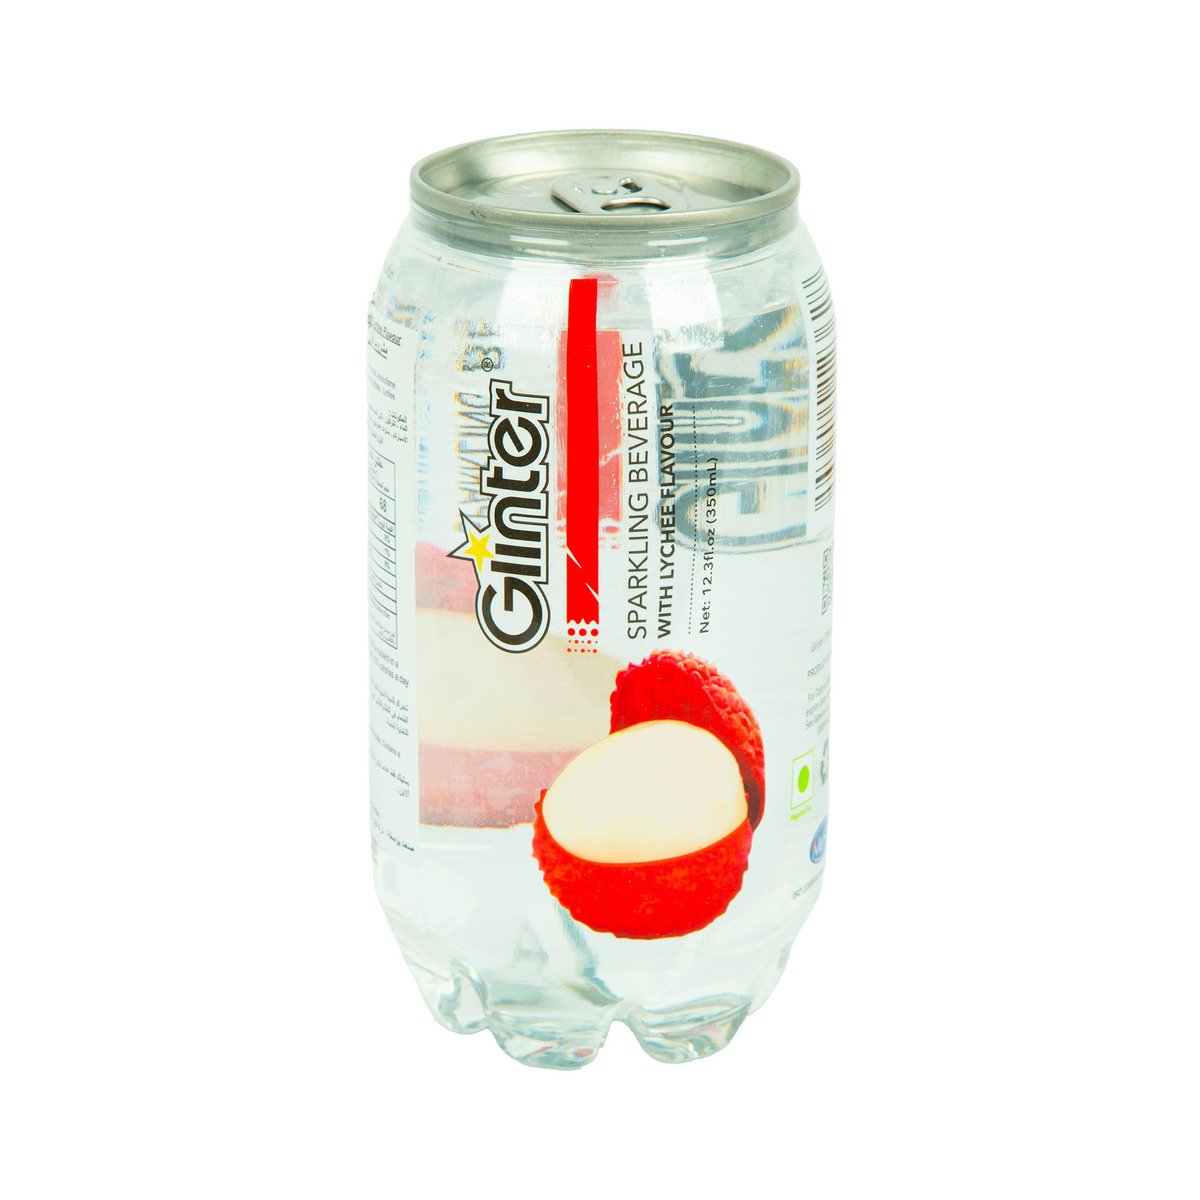 Glinter Sparkling Beverage with Lychee Flavour 350 ml